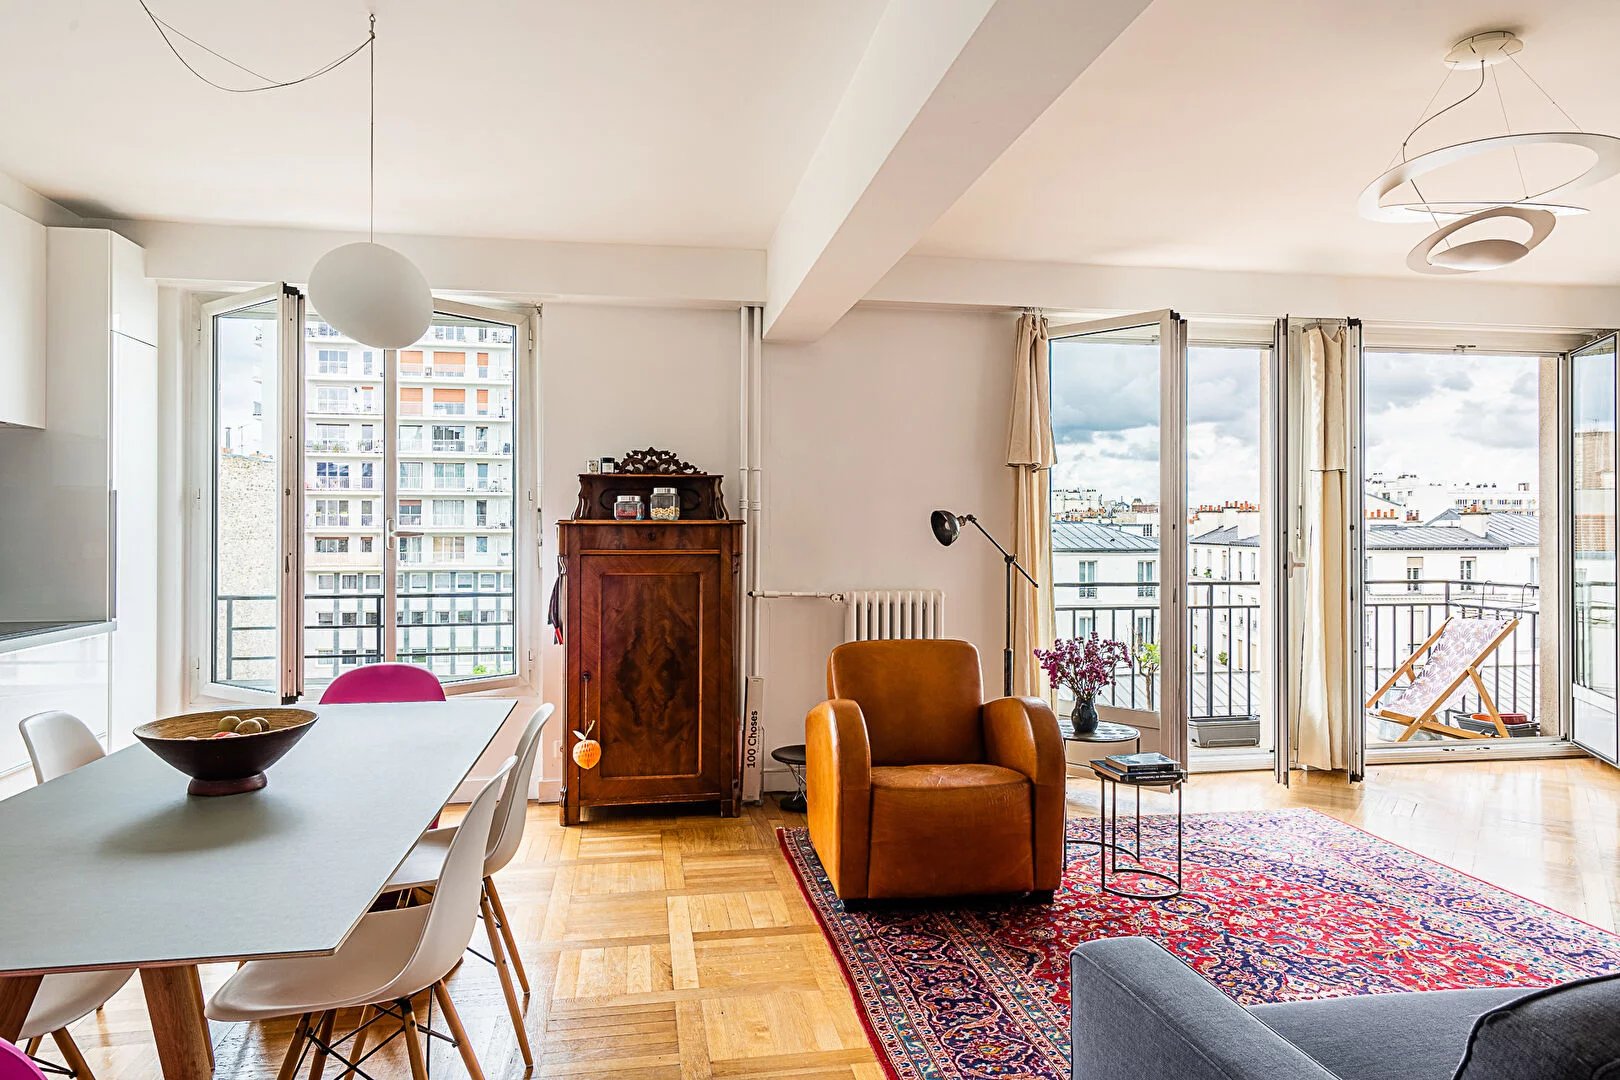 Apartment for sale three bedrooms Motte Picquet Grenelle 88 sqm 75015 bright sixth floor views Paris